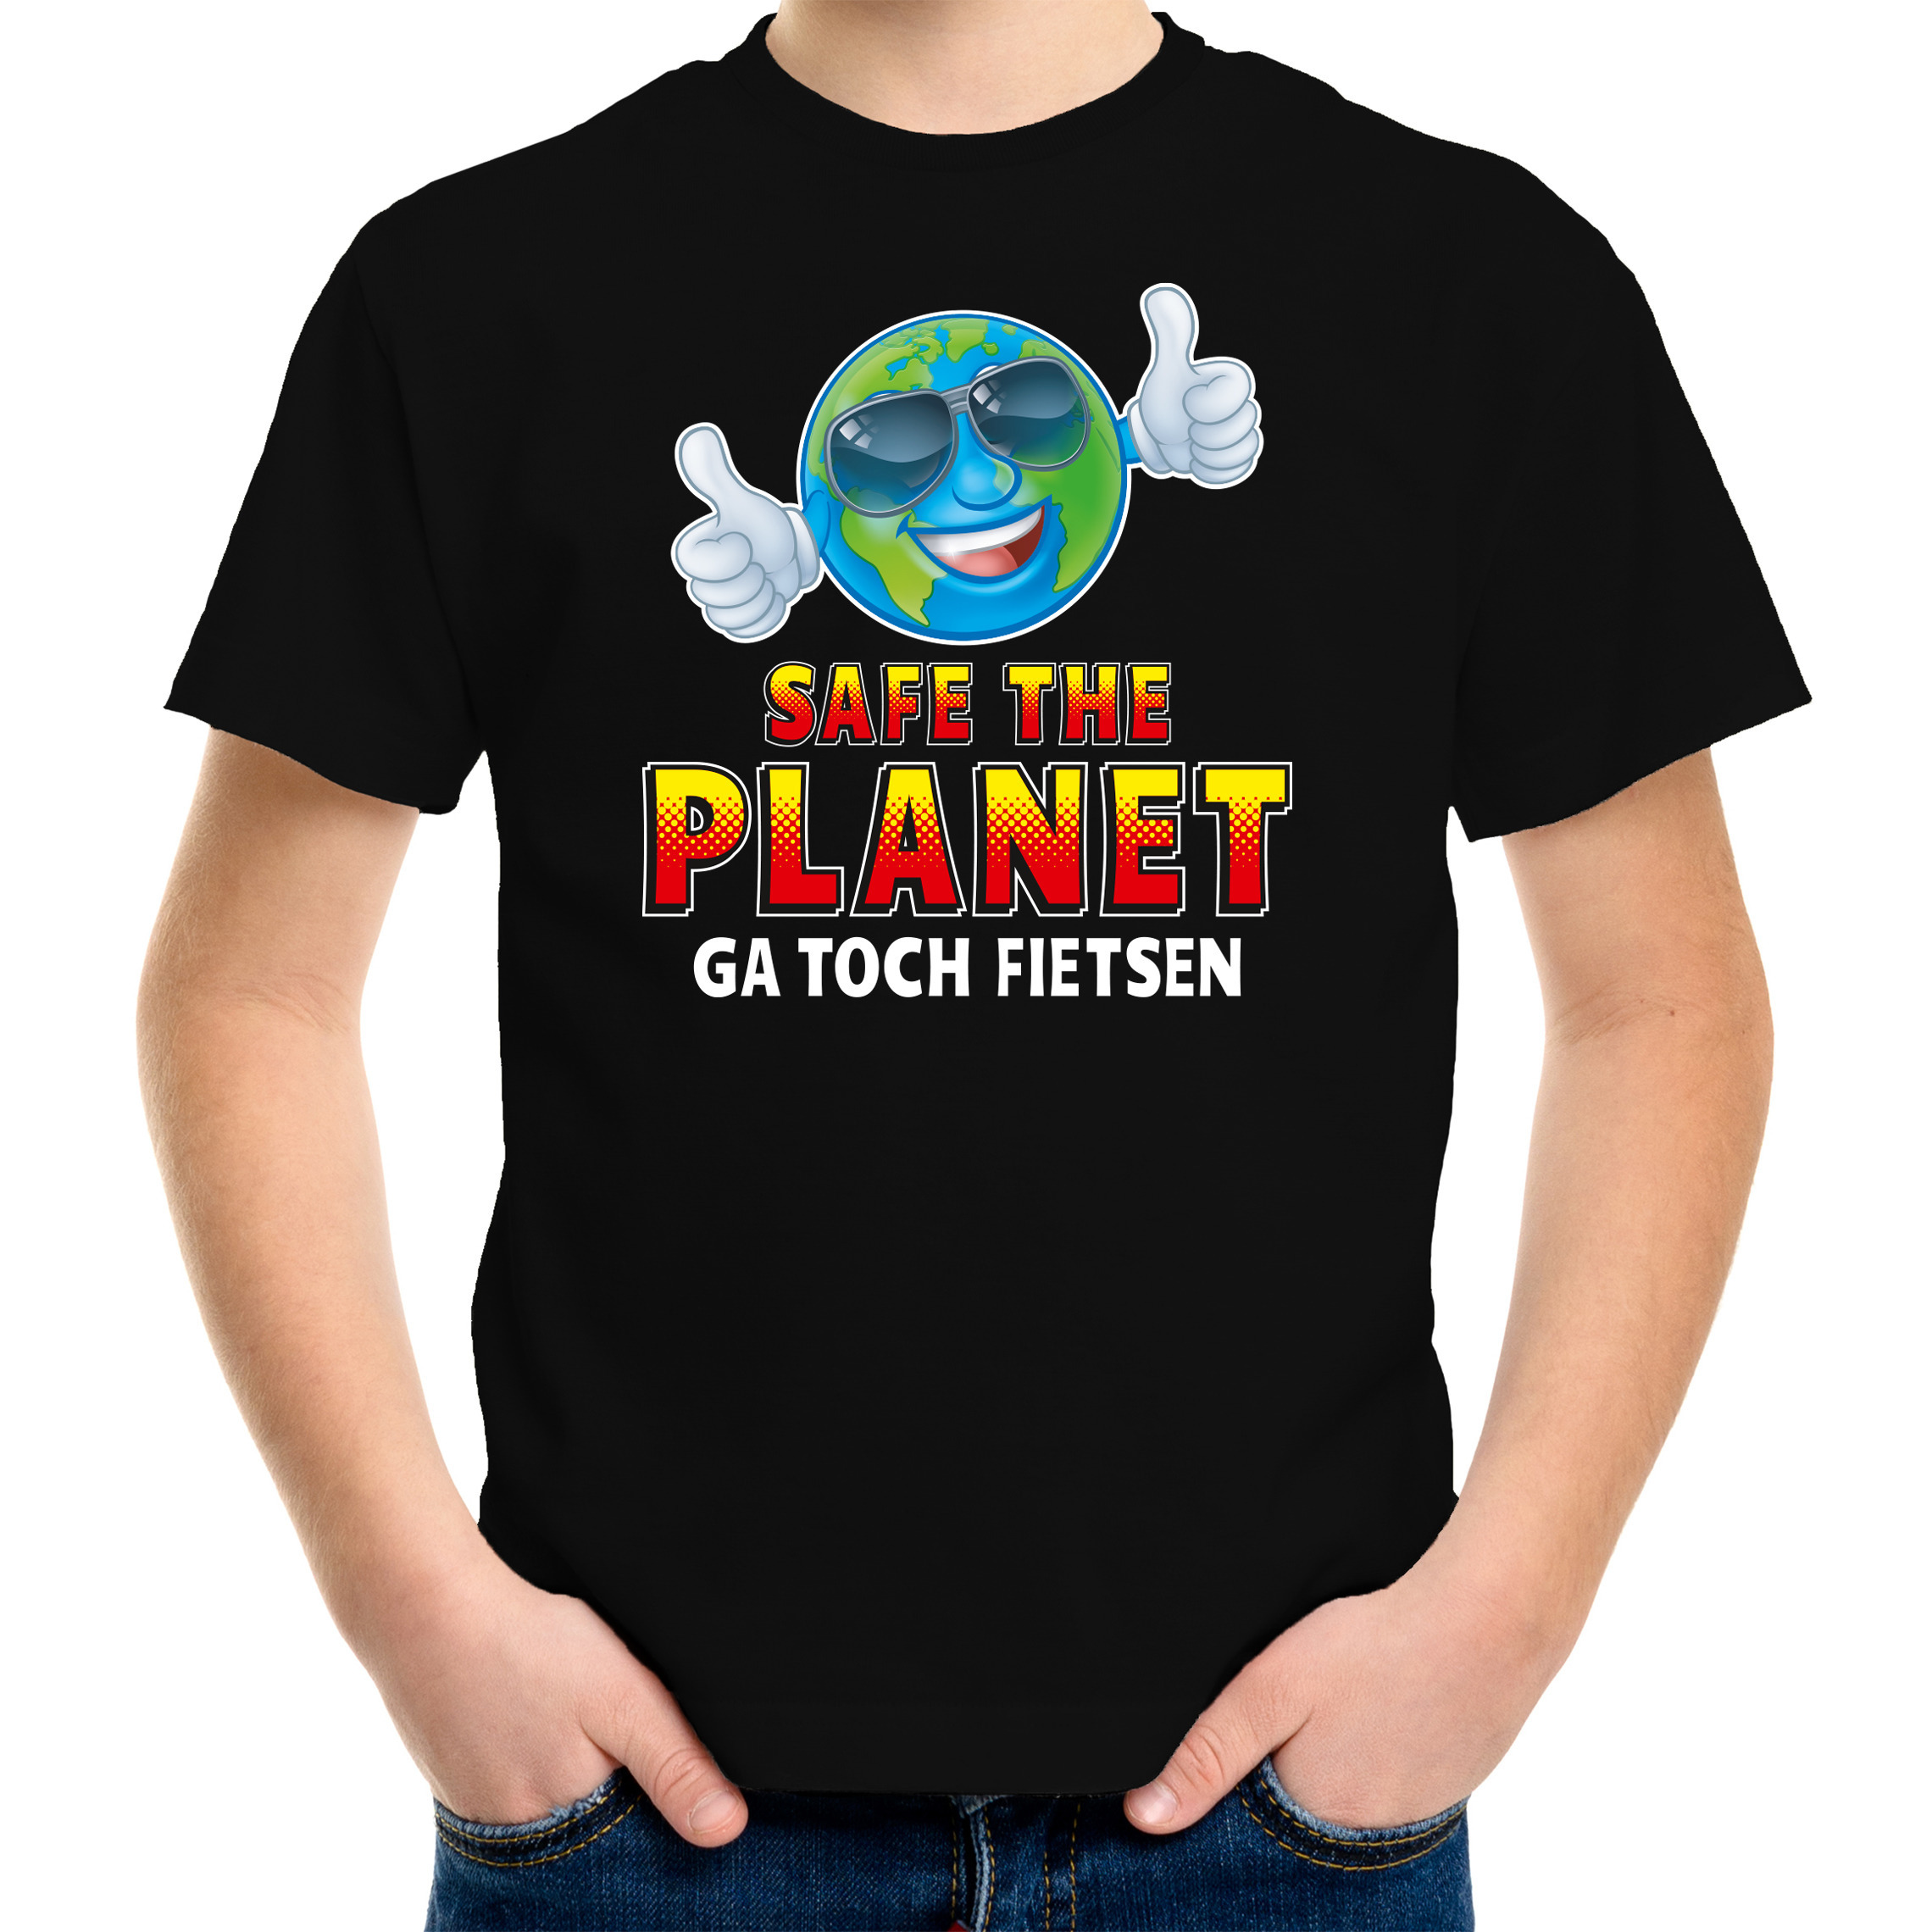 Funny emoticon t-shirt safe the planet zwart voor kids